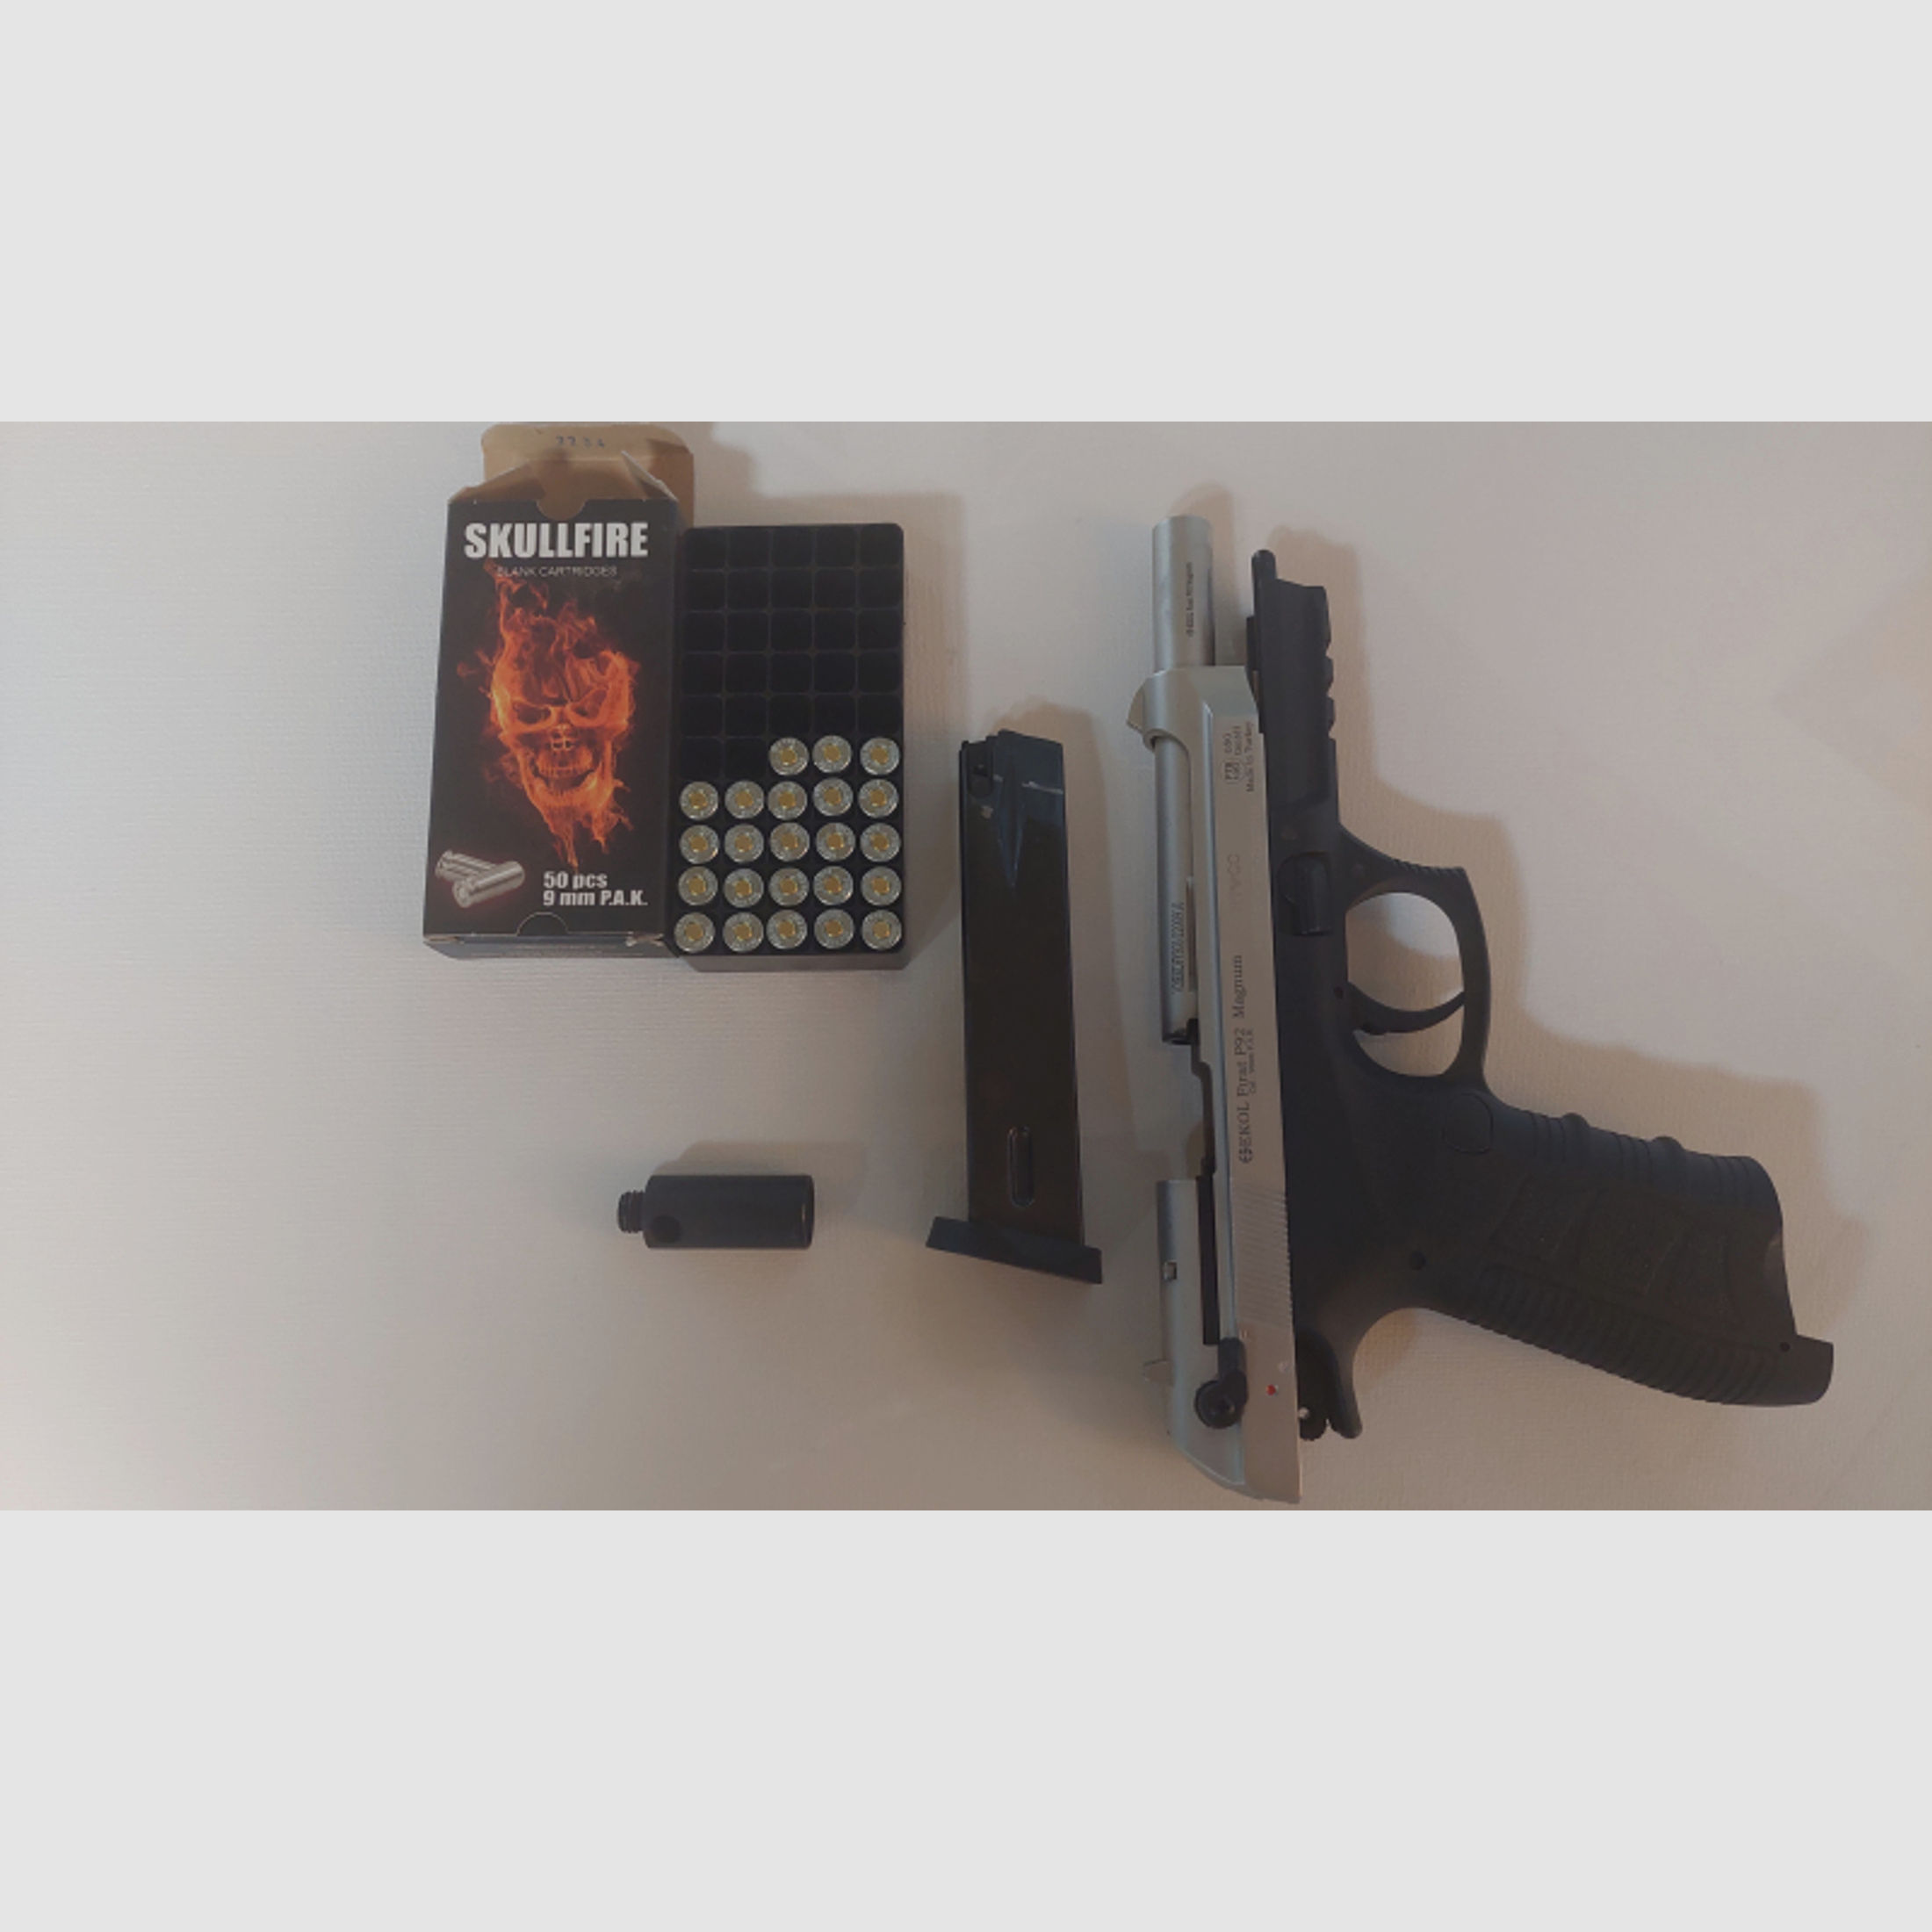 Firat P92 Magnum Nickel Signal Schreckschußpistole